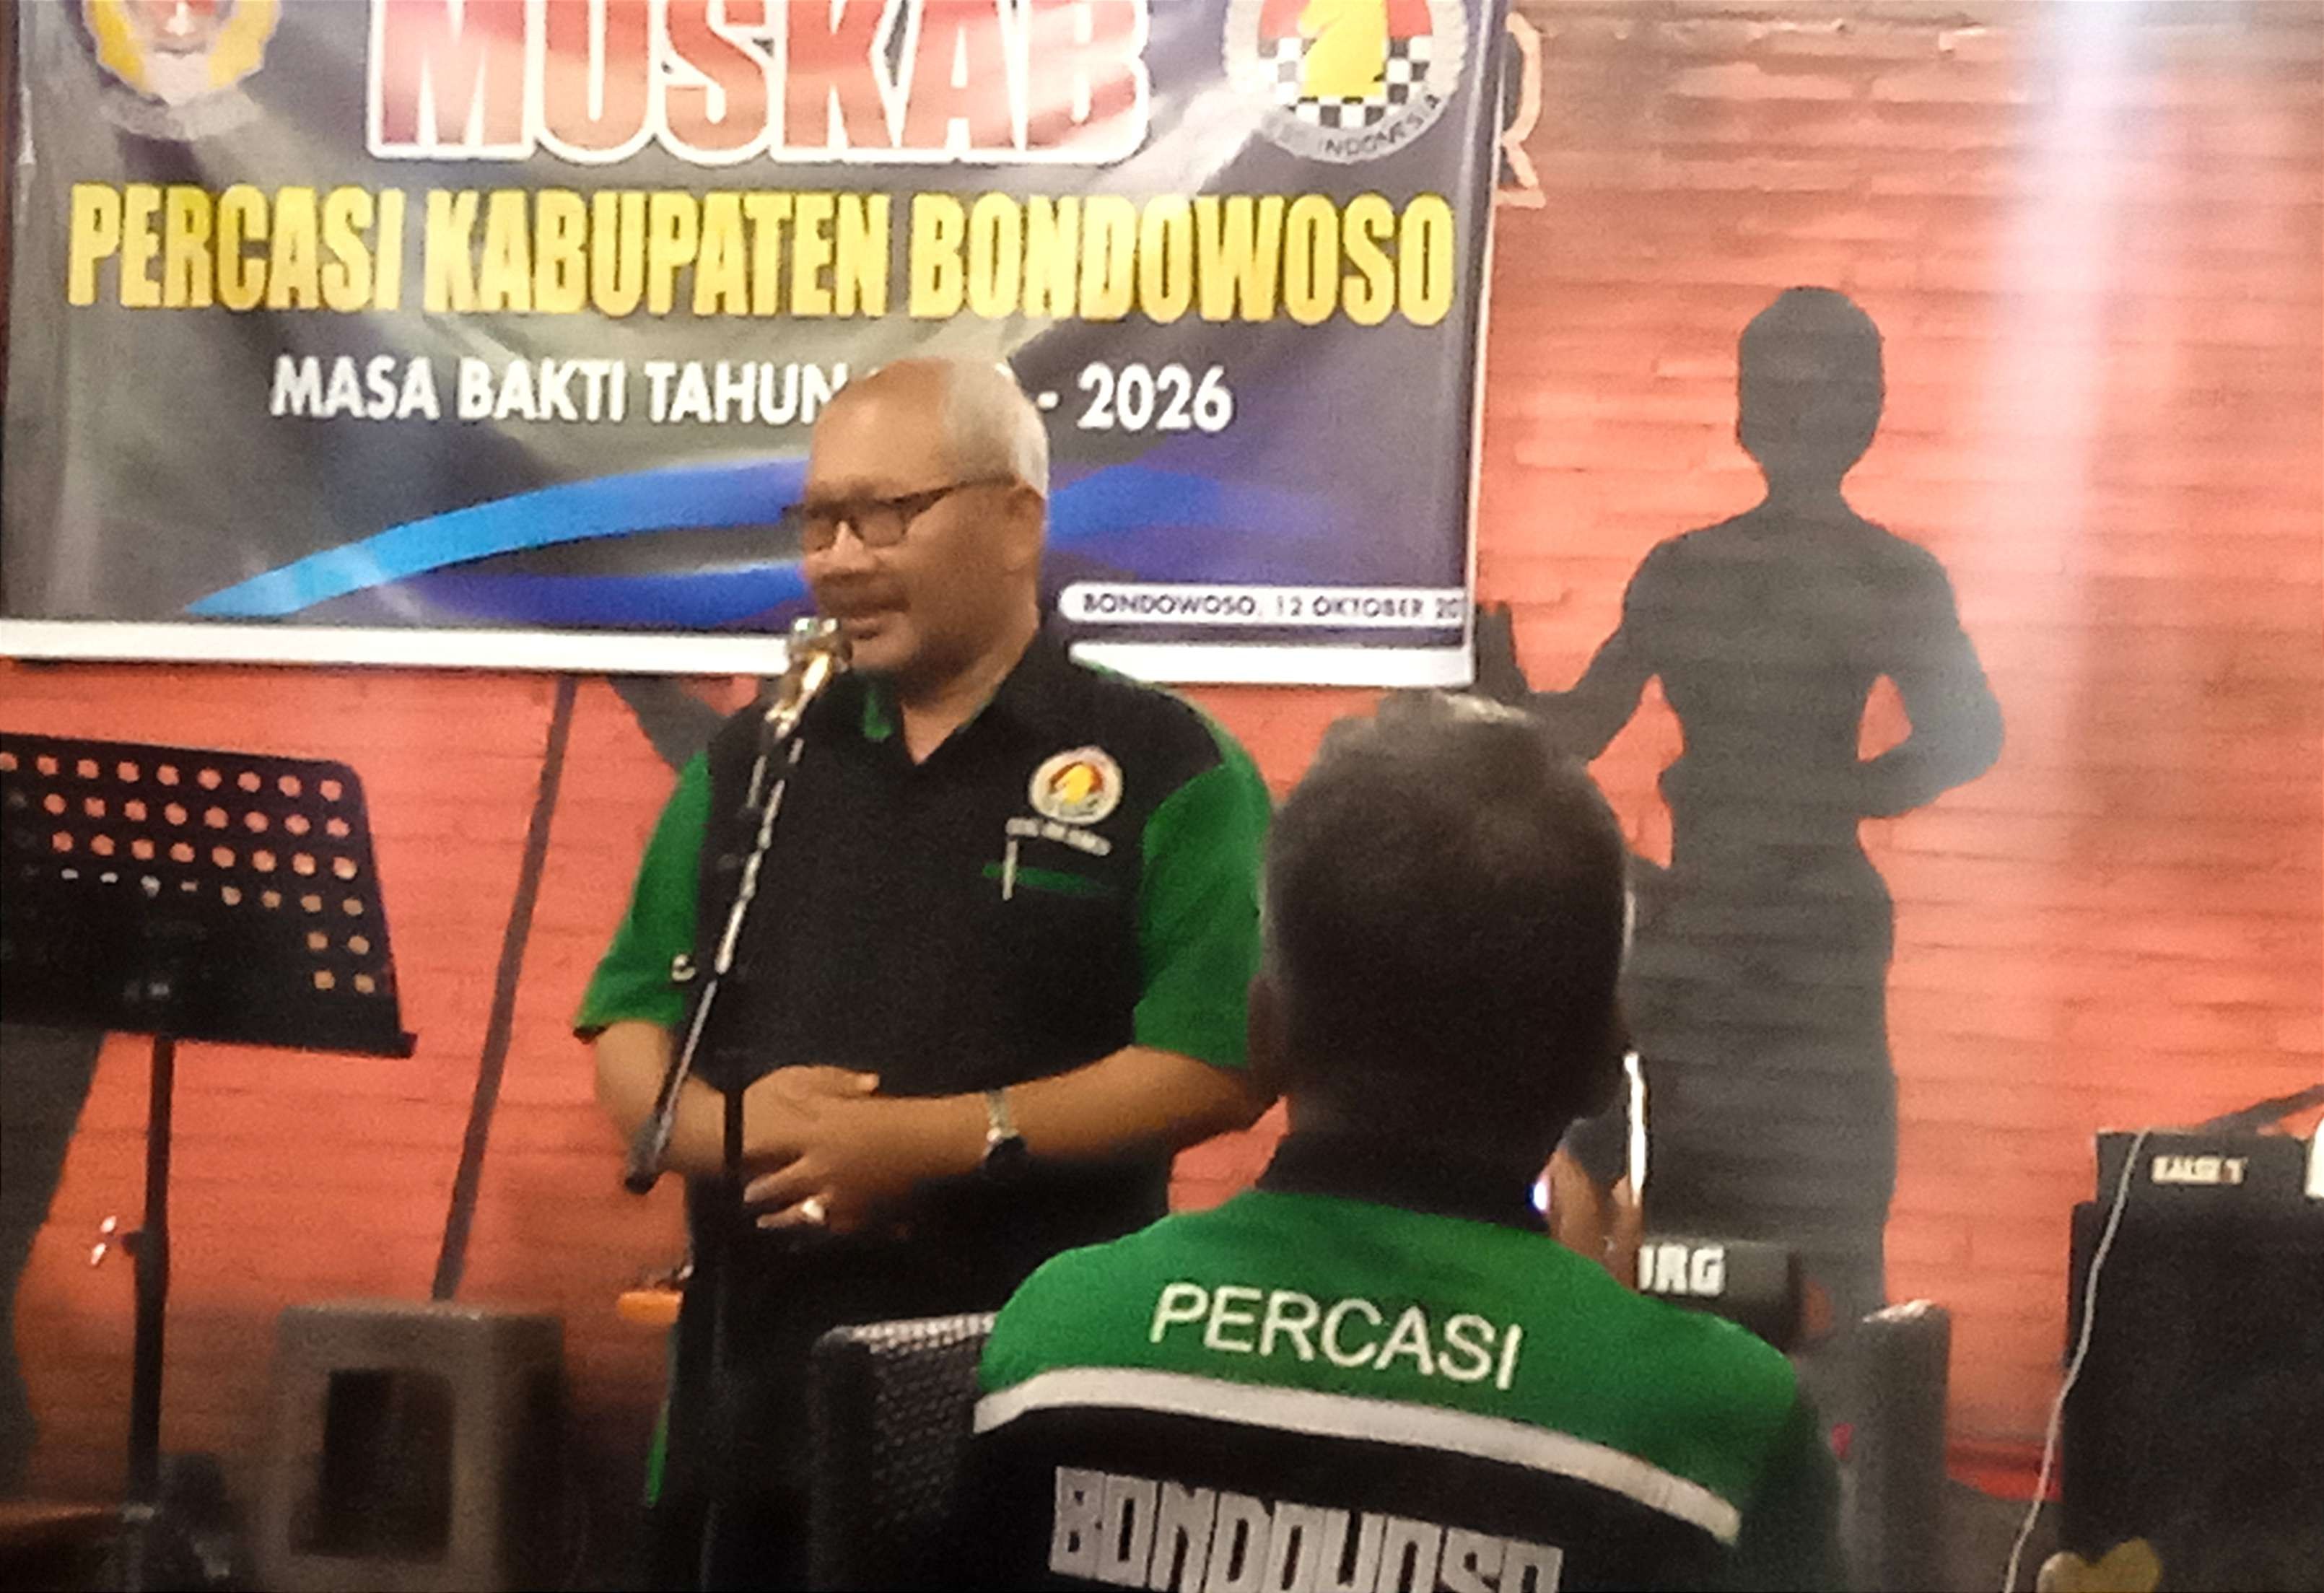 Ketua Pengkab Percasi Bondowoso 2022-2026, Suparji yang terpilih aklamasi dalam Muskab Percasi.(foto: Guido Saphan/Ngppibareng.id)